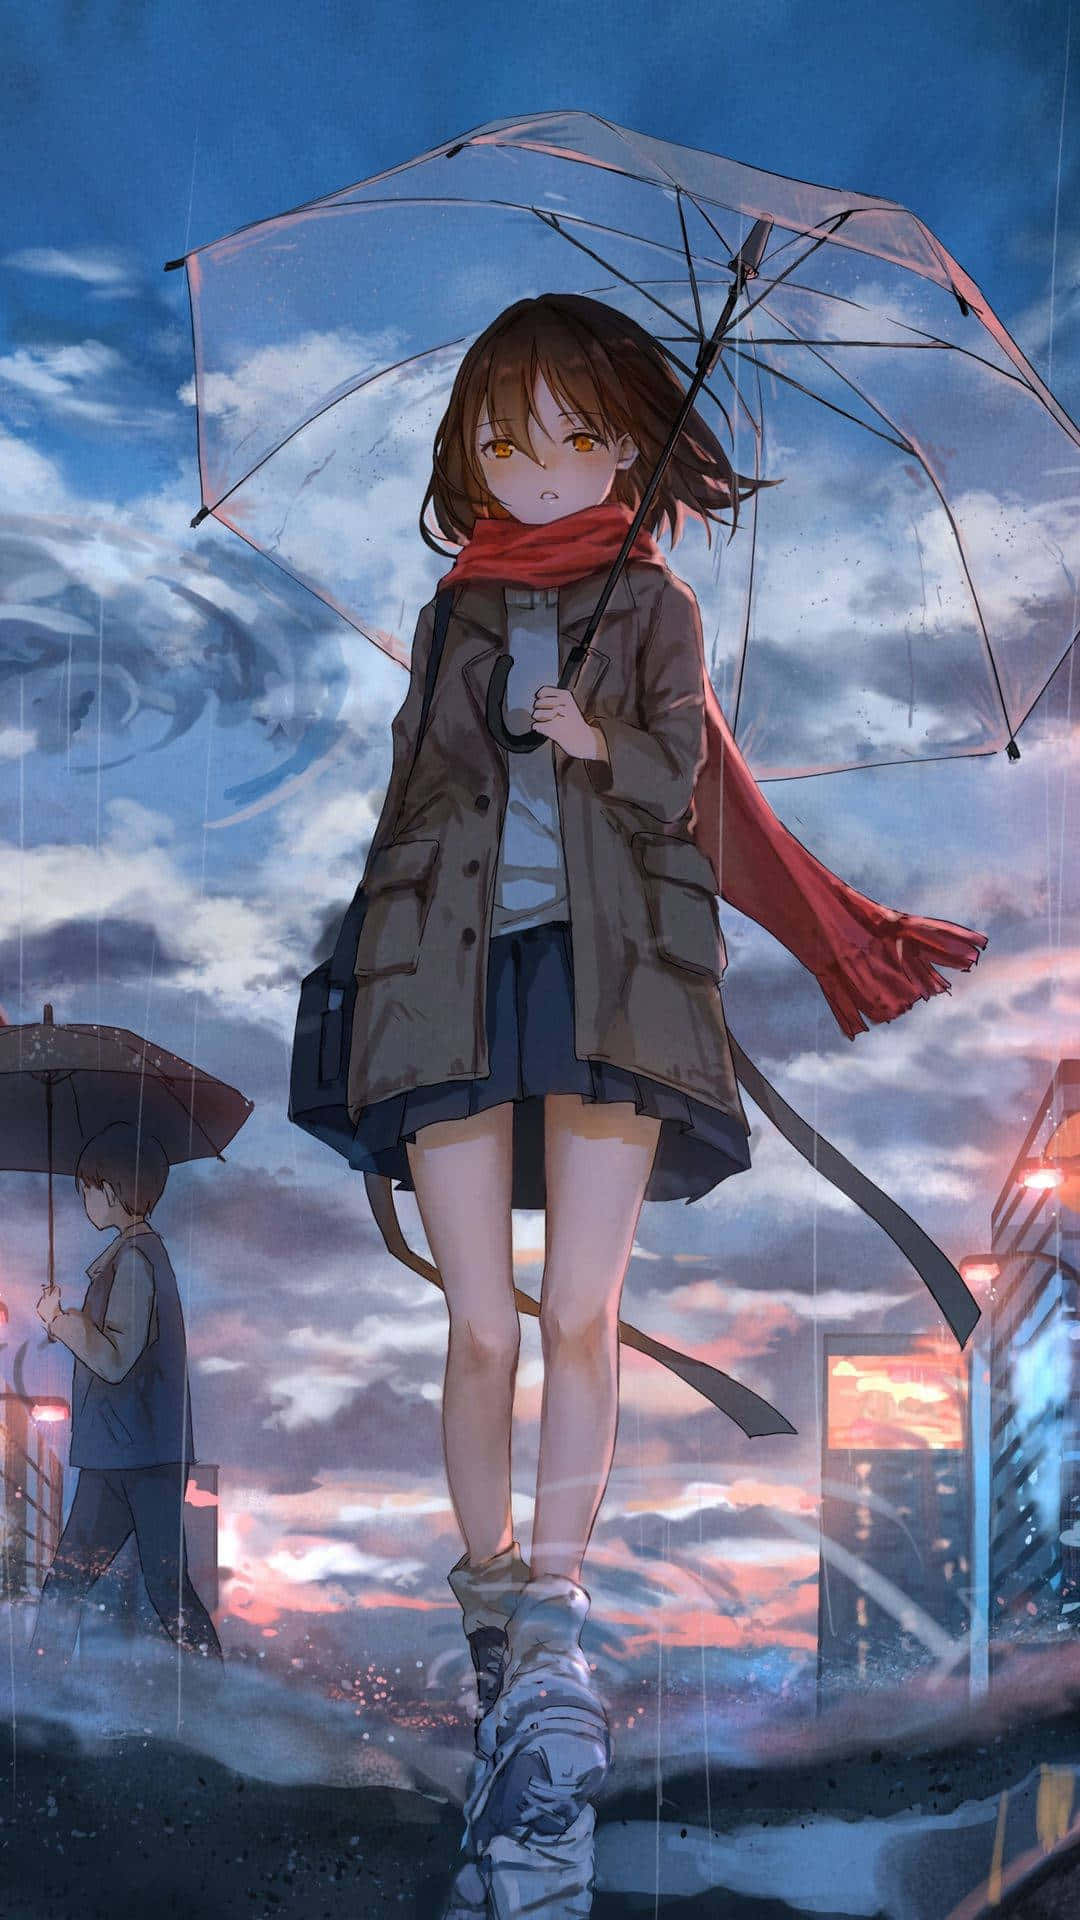 Anime Umbrella girl render by MiyumiRose on DeviantArt